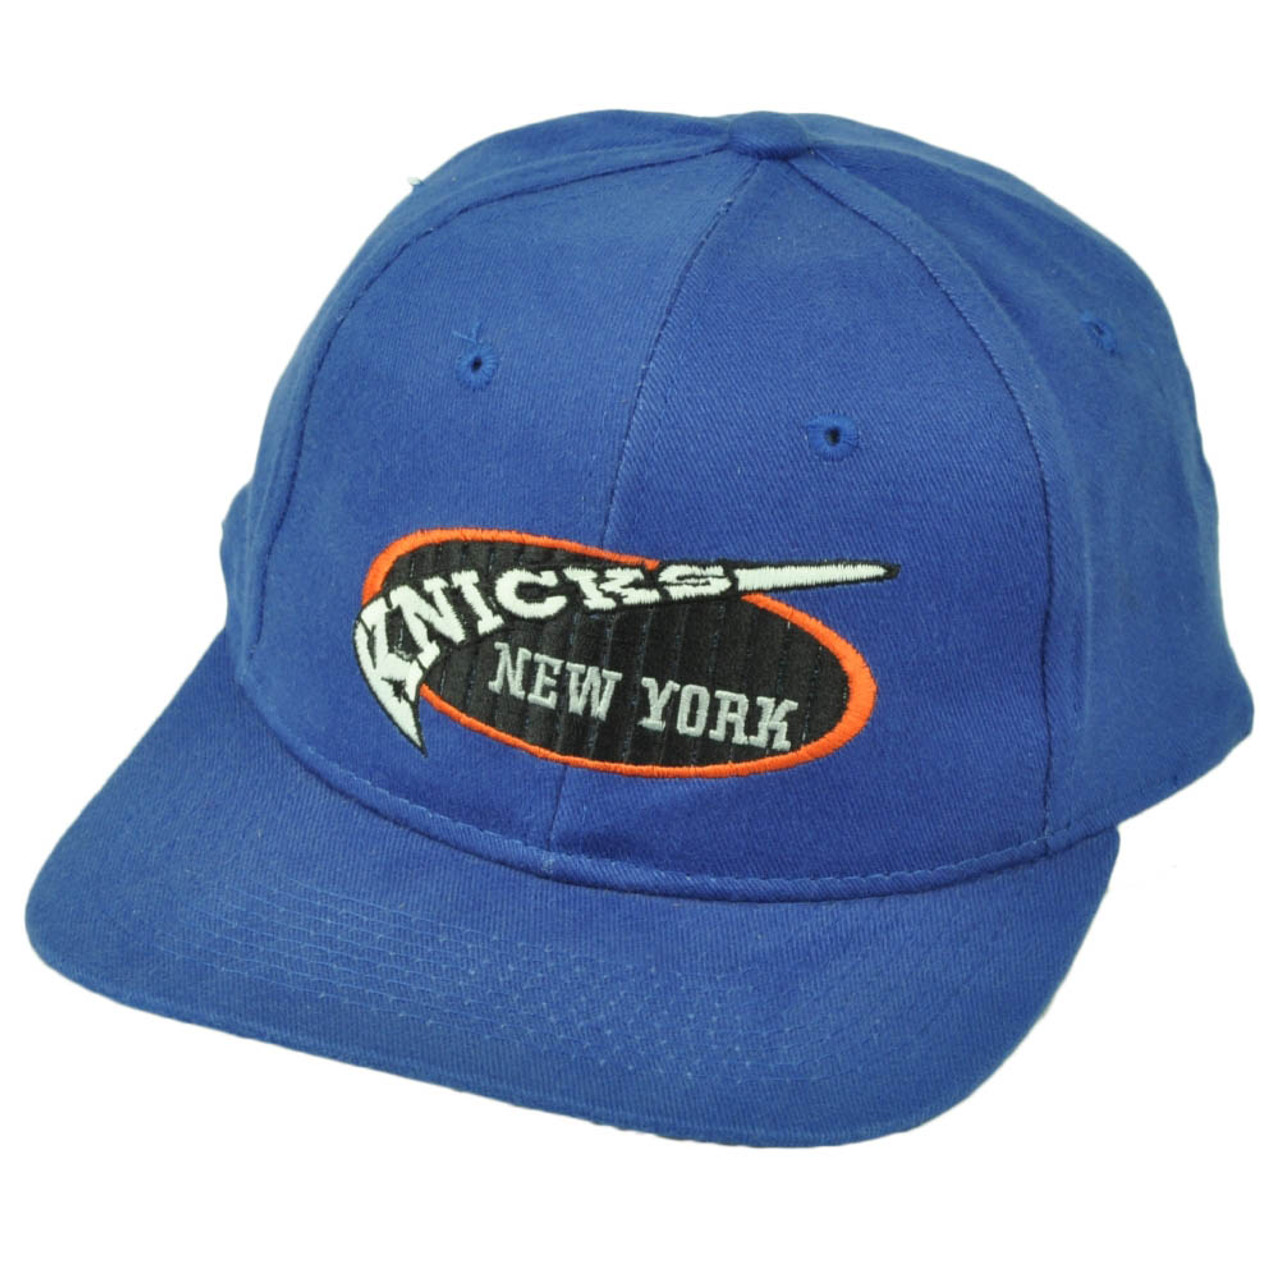 New York Knicks Hat Cap Strapback Men NBA Basketball Blue Retro Elevation  NYK